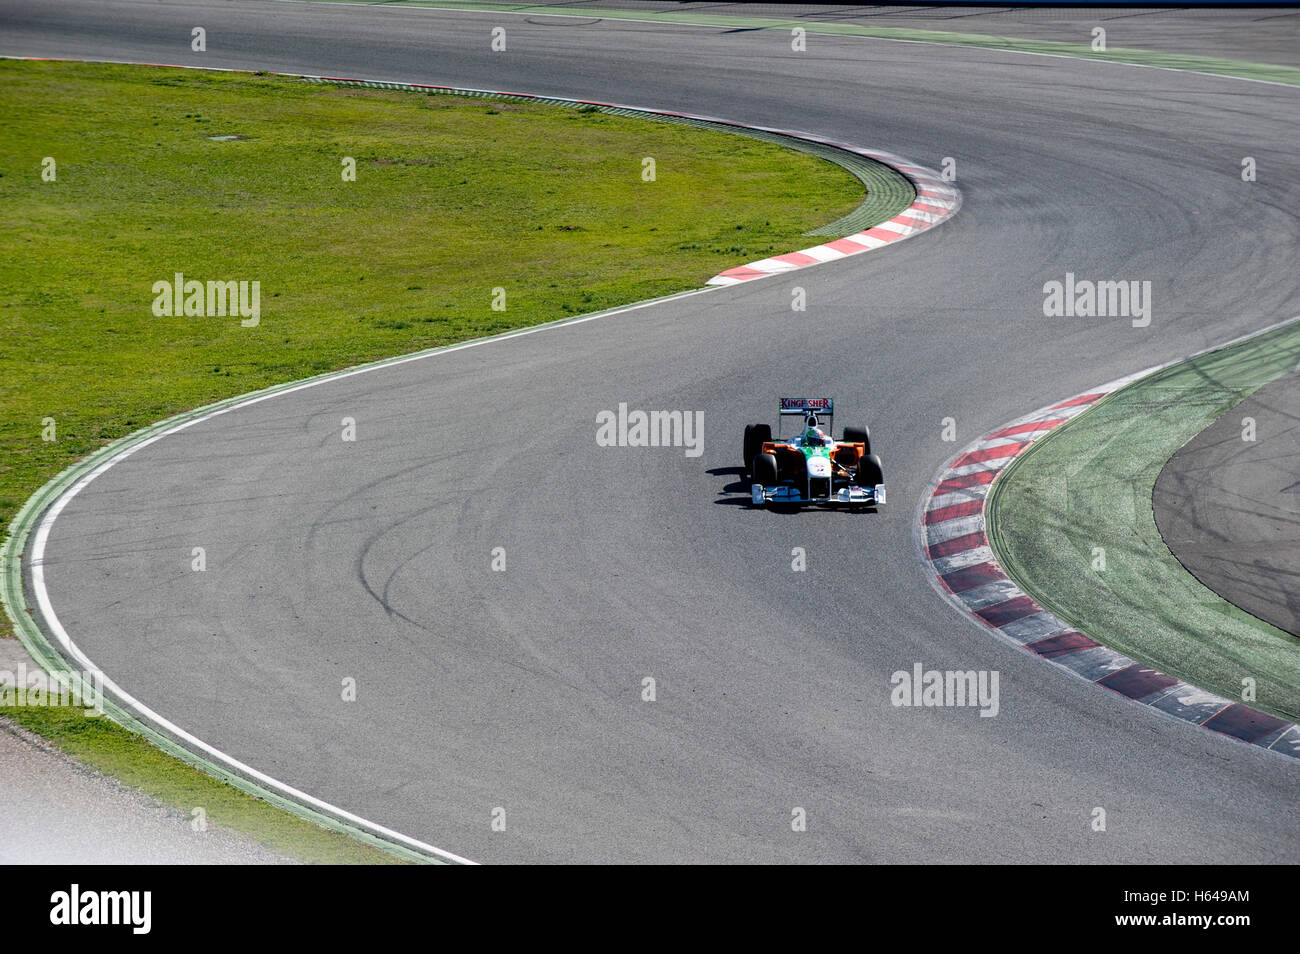 Motorsport, Vitantonio Liuzzi, ITA, in la Force India VJM02 race car, Formula 1 i test sul Circuito de Catalunya race track Foto Stock